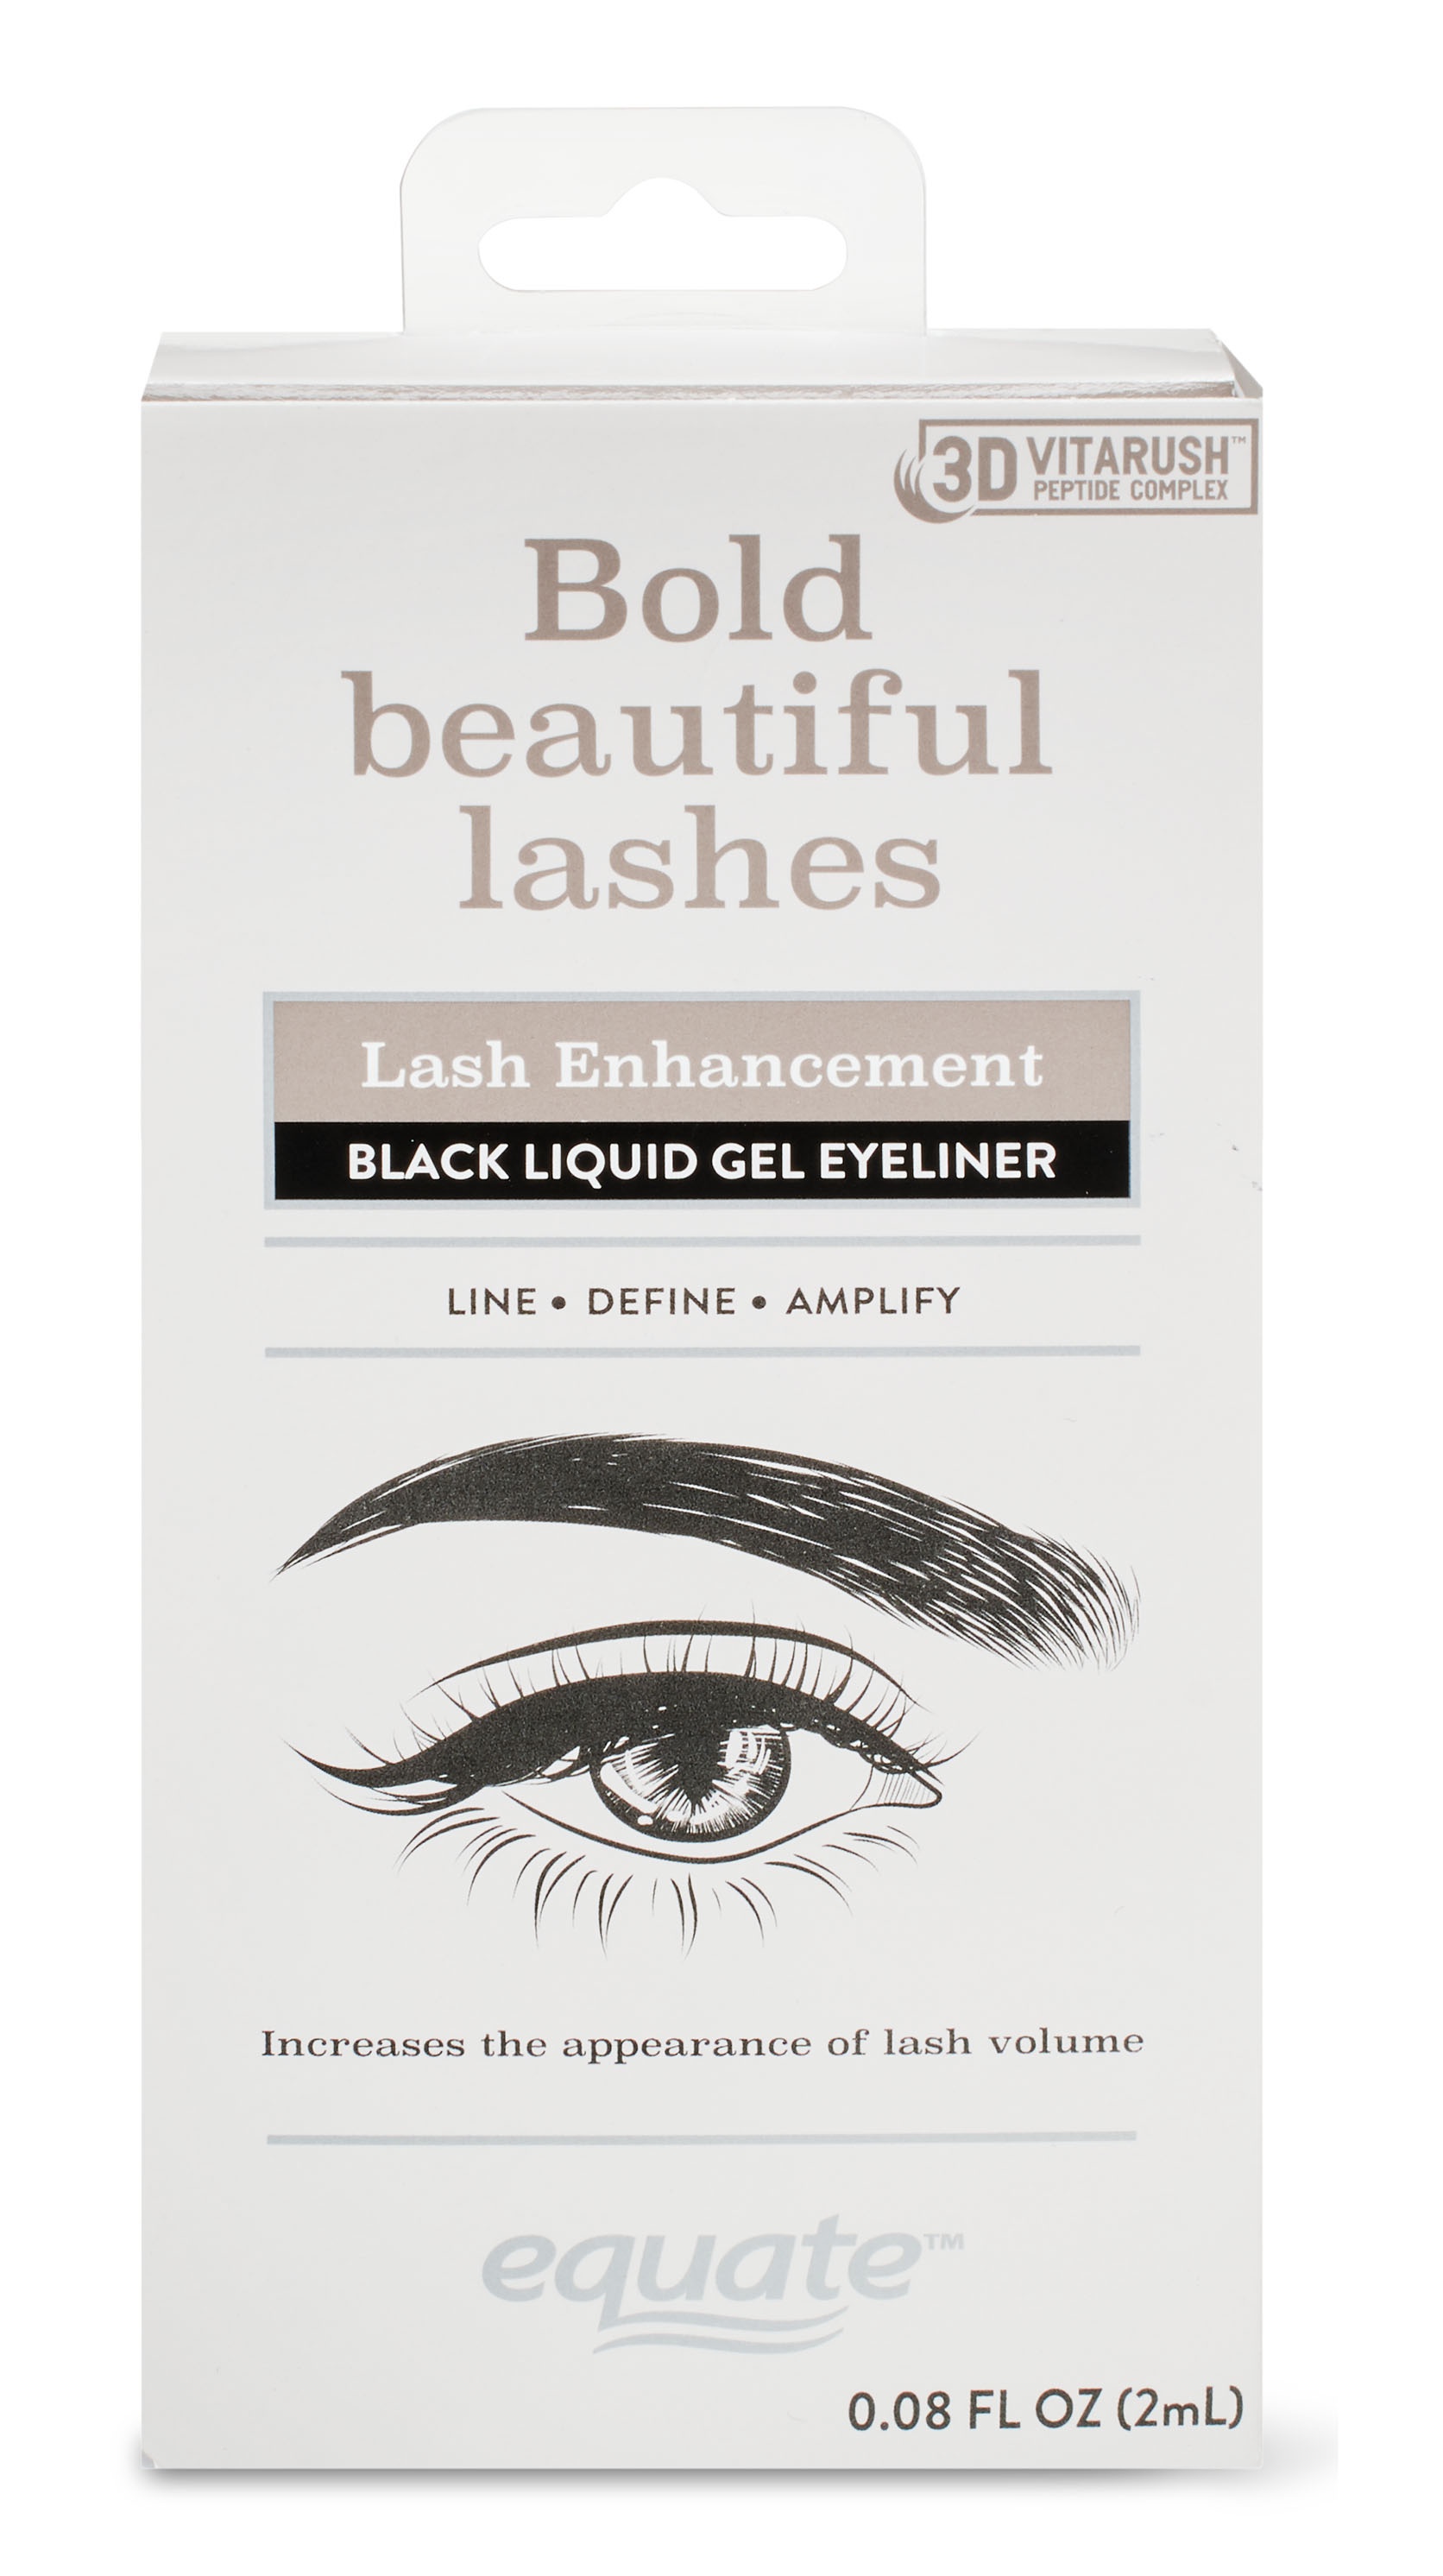 Equate Lash Enhancement Black Liquid Gel Eyeliner